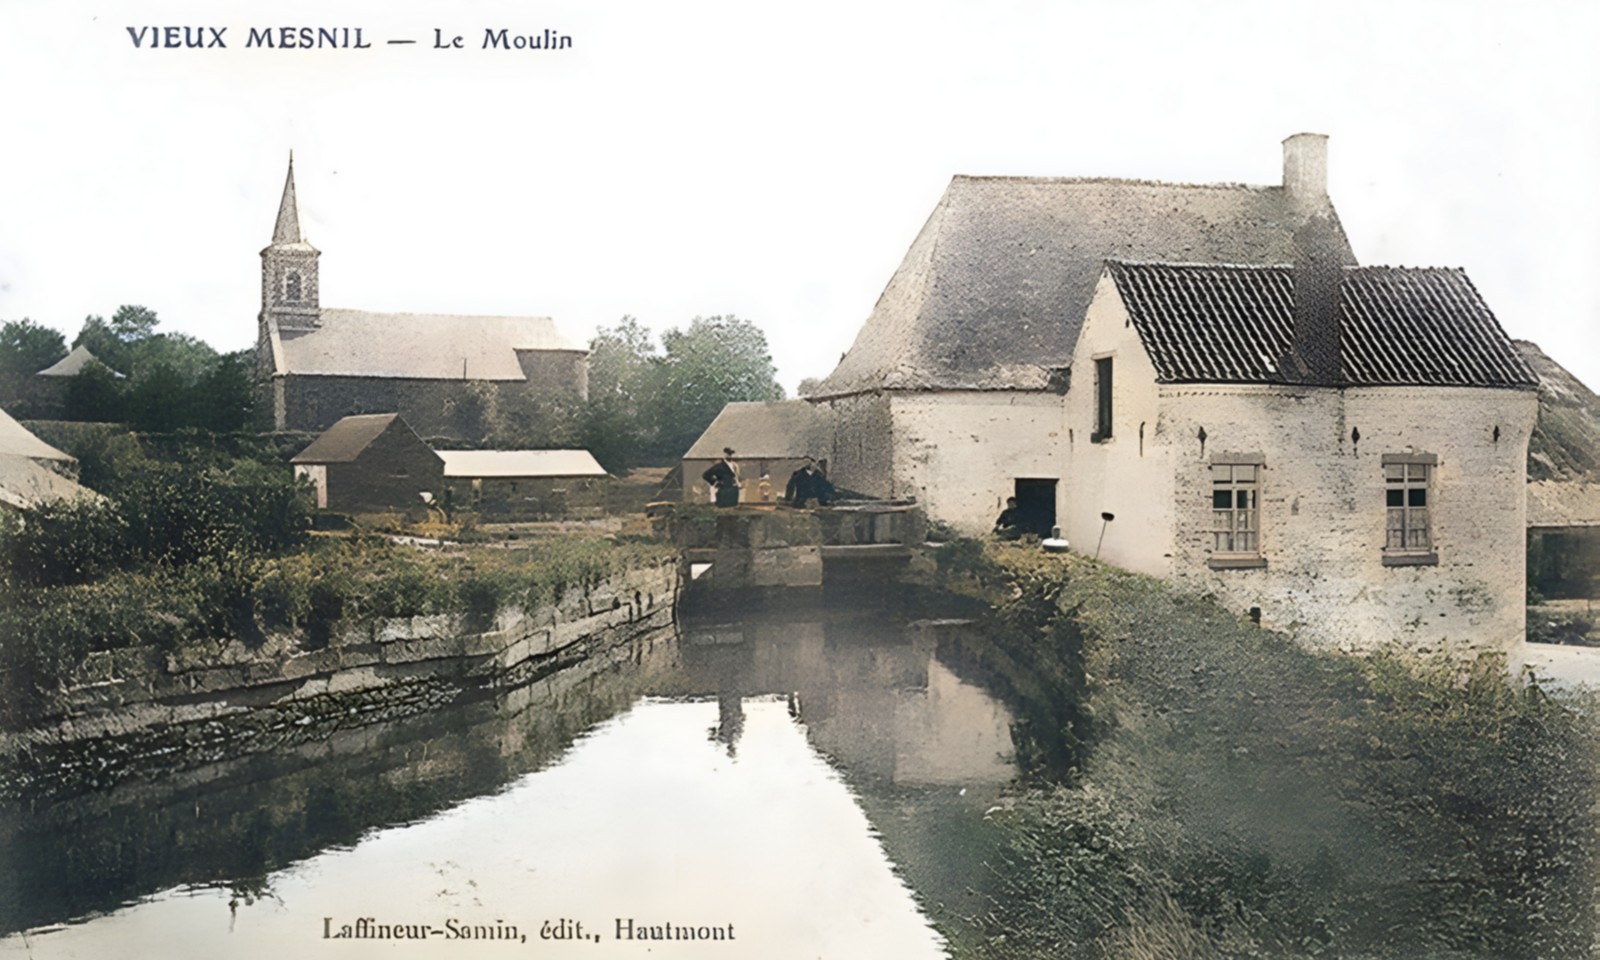 L'ancien moulin de Vieux Mesnil.